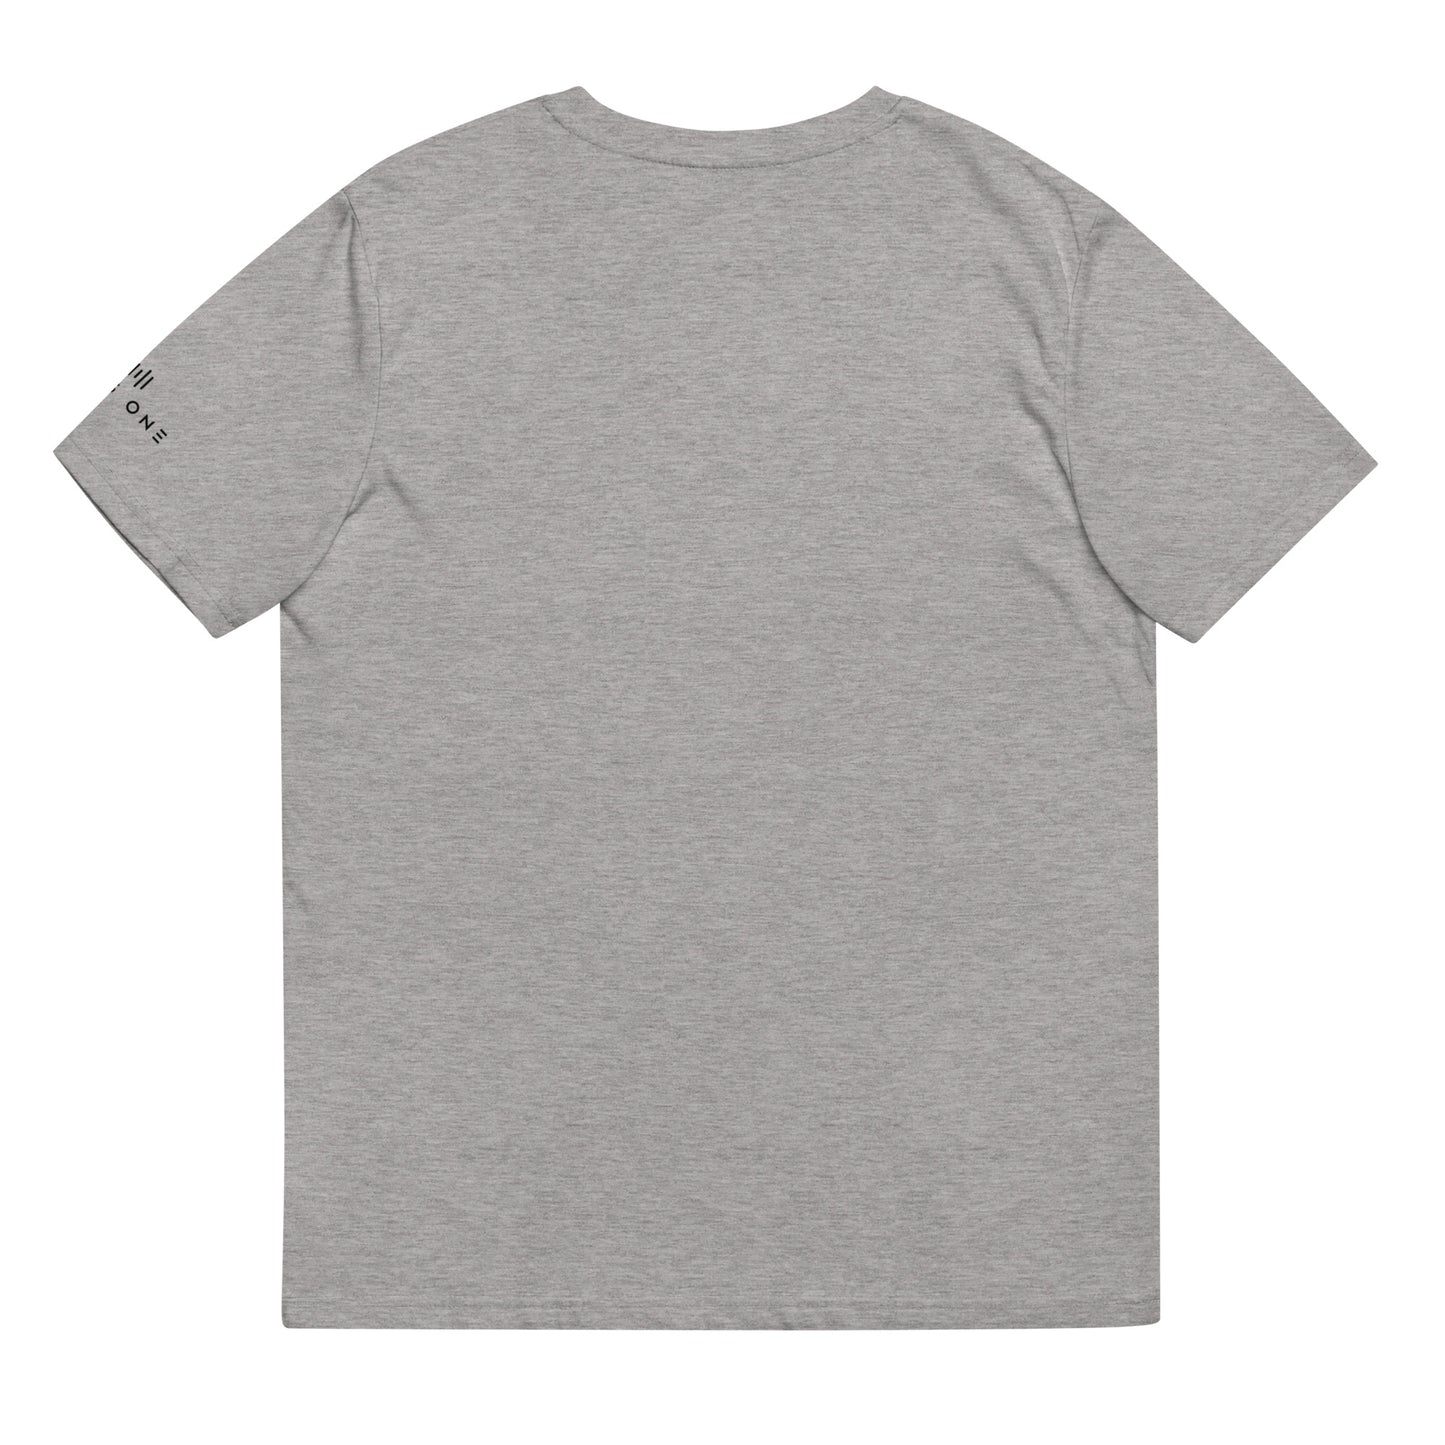 Prototype (v4) Unisex organic cotton t-shirt (Black Text)